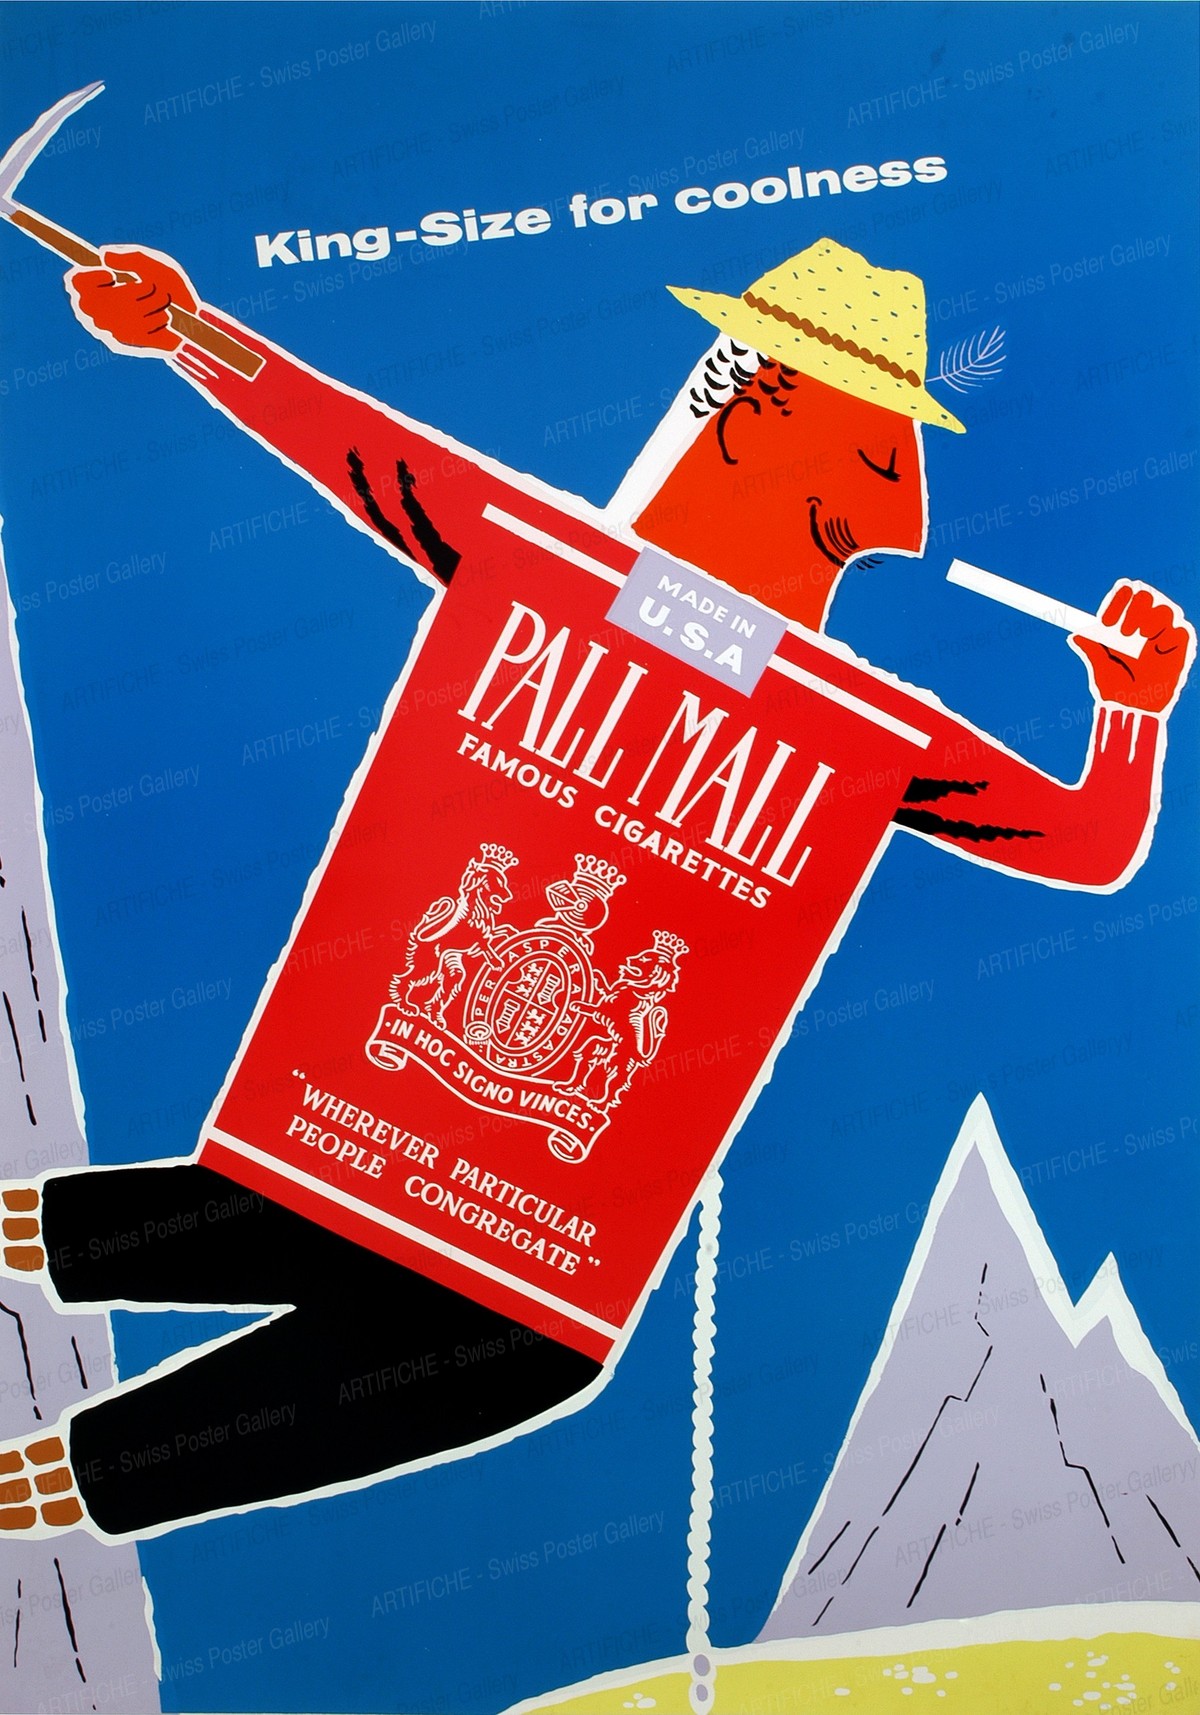 Pall Mall Tobacco (Sommerhut), Daphne Padden